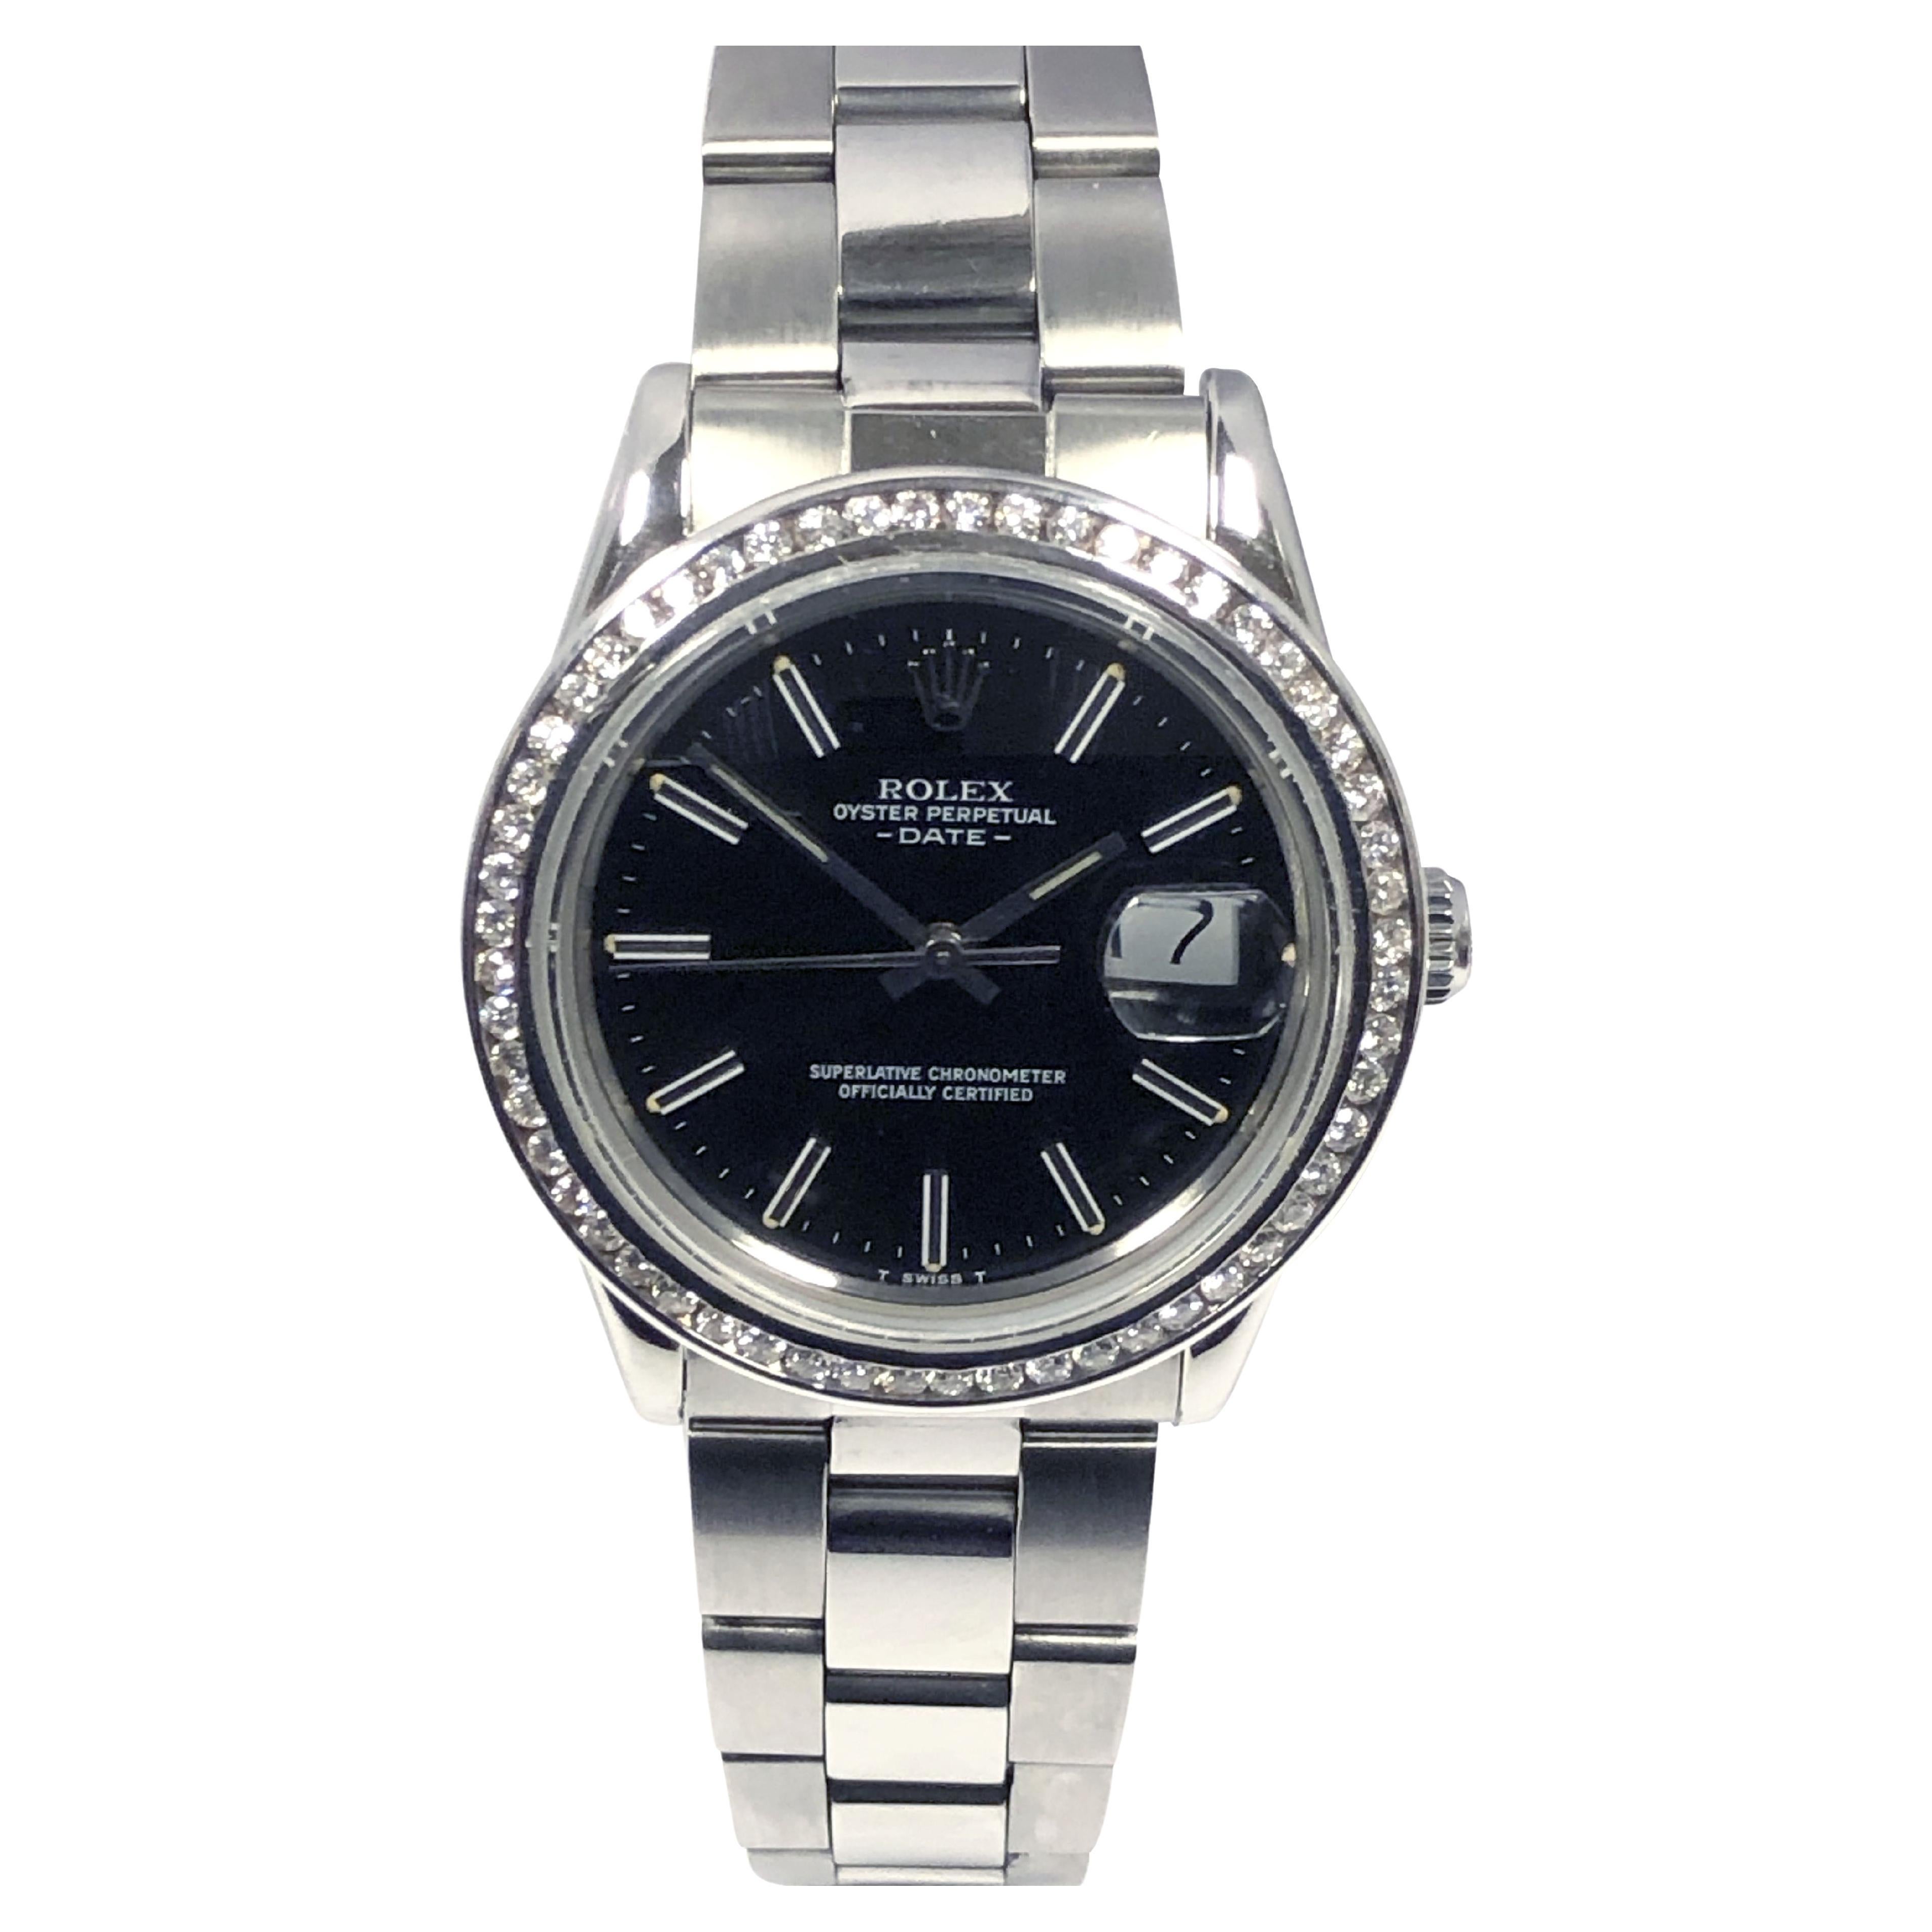 Rolex Steel Date Model Automatic Wrist Watch with Diamond Bezel